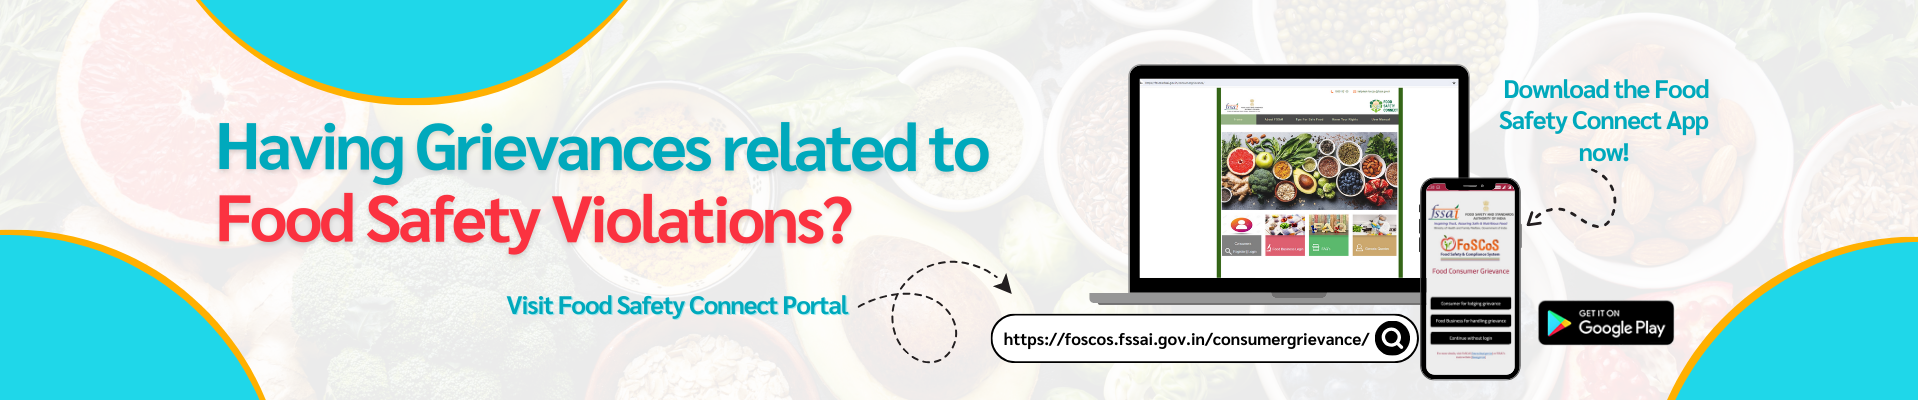 Visit Food Safety Connect Portal